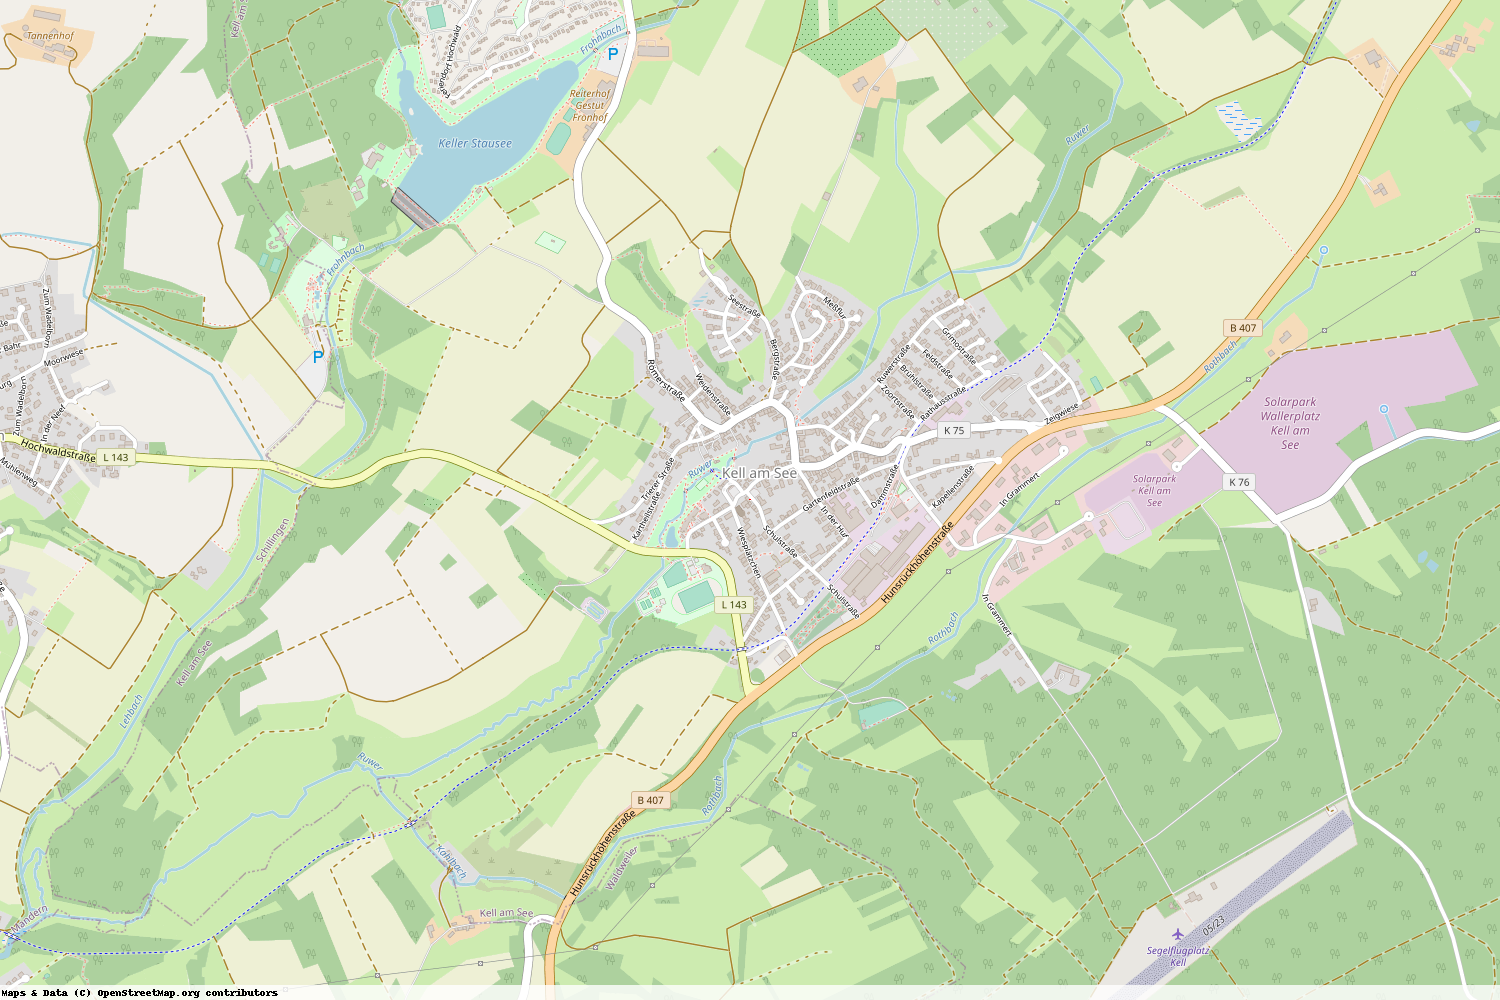 Ist gerade Stromausfall in Rheinland-Pfalz - Trier-Saarburg - Kell am See?